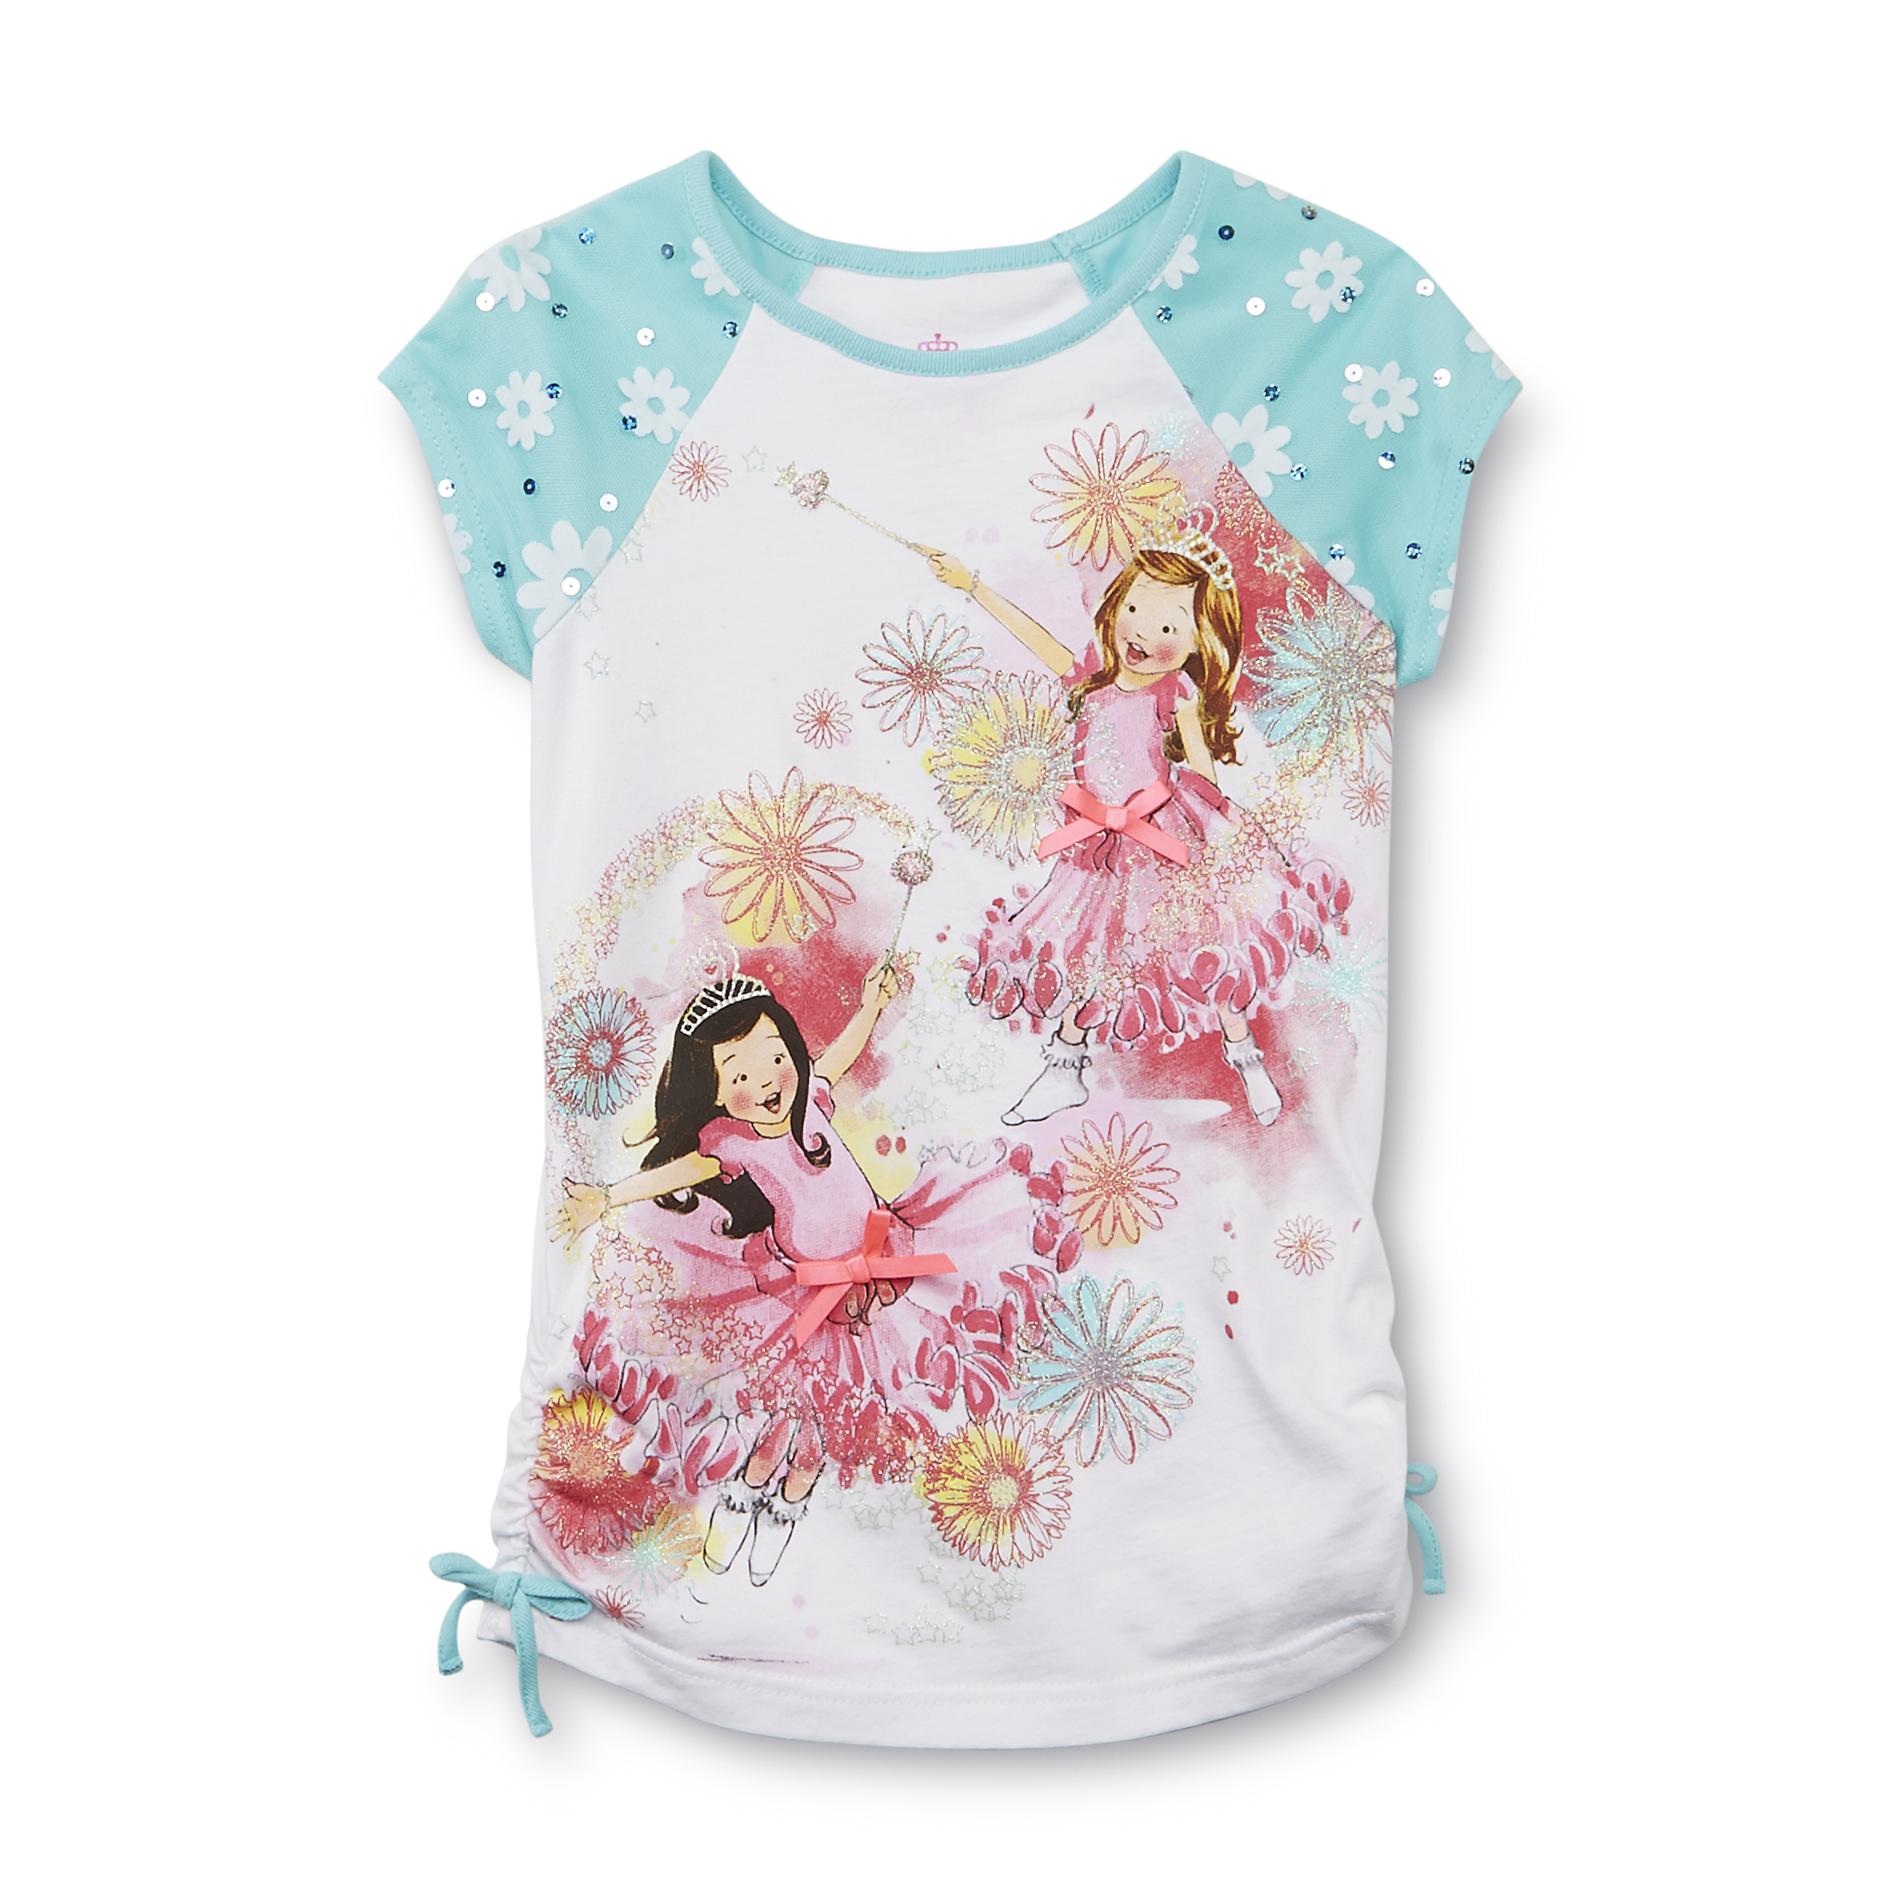 Sophia Grace & Rosie Girl's Glitter Graphic T-Shirt - Daisies